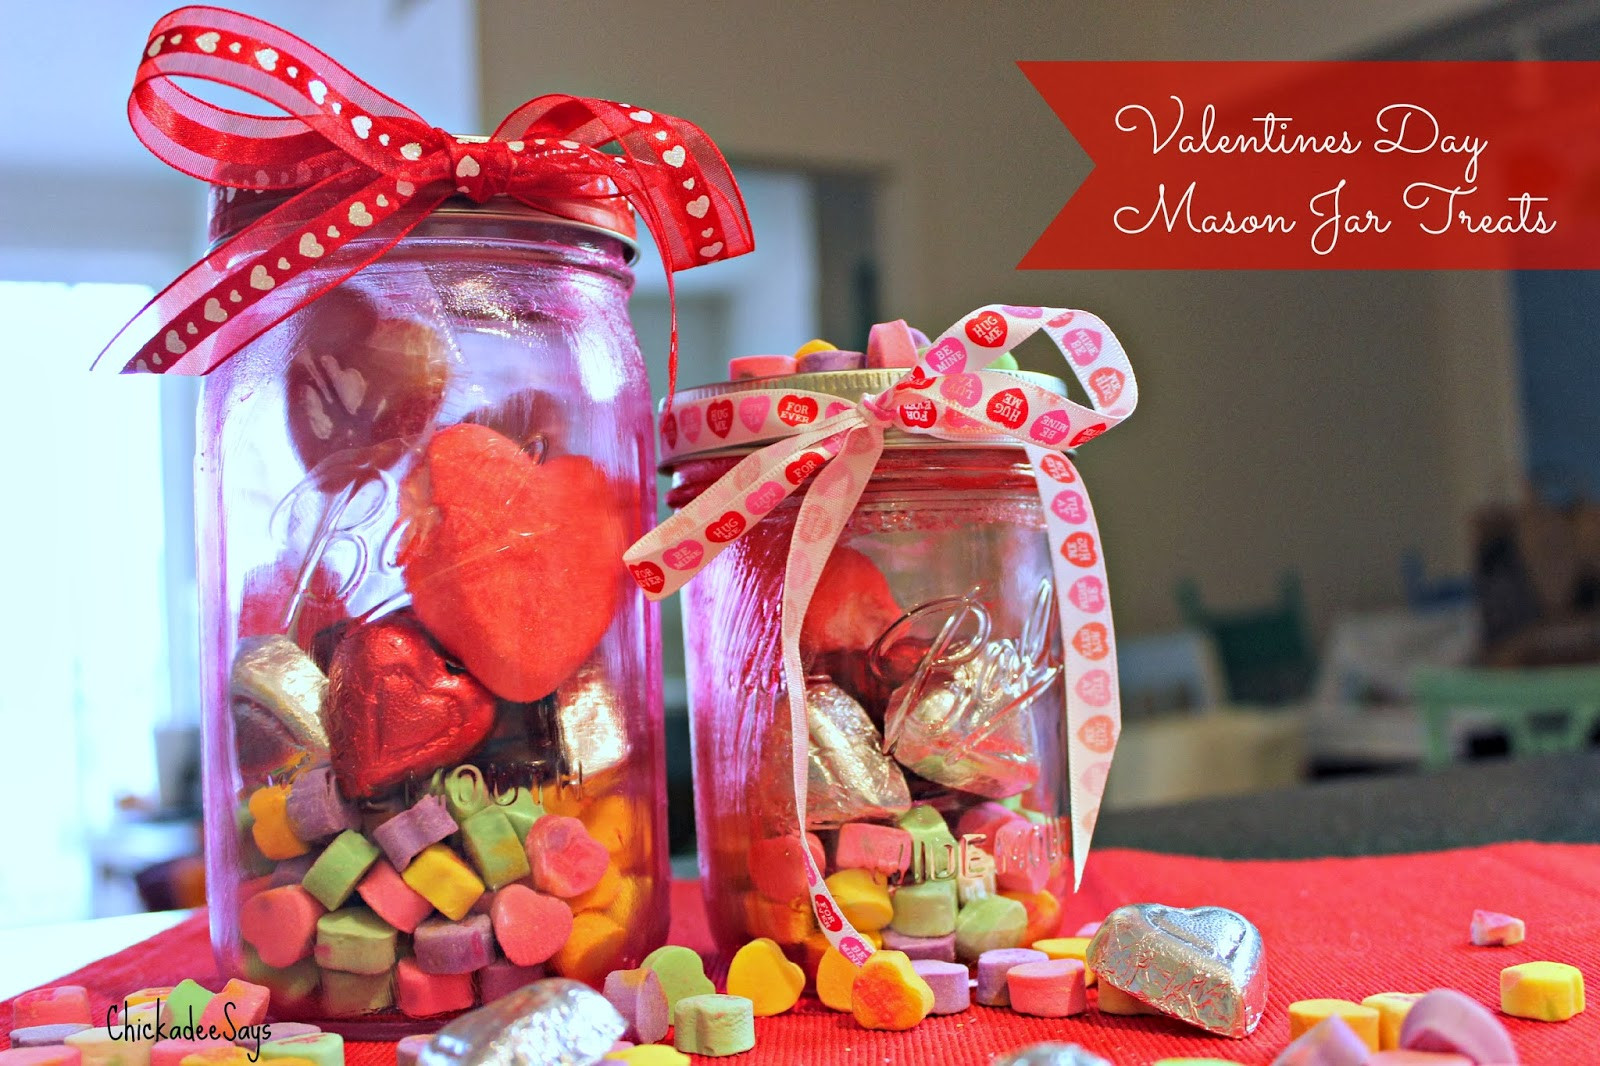 Do It Yourself Valentine Gift Ideas
 Do It Yourself Valentine’s Day Mason Jar Treats